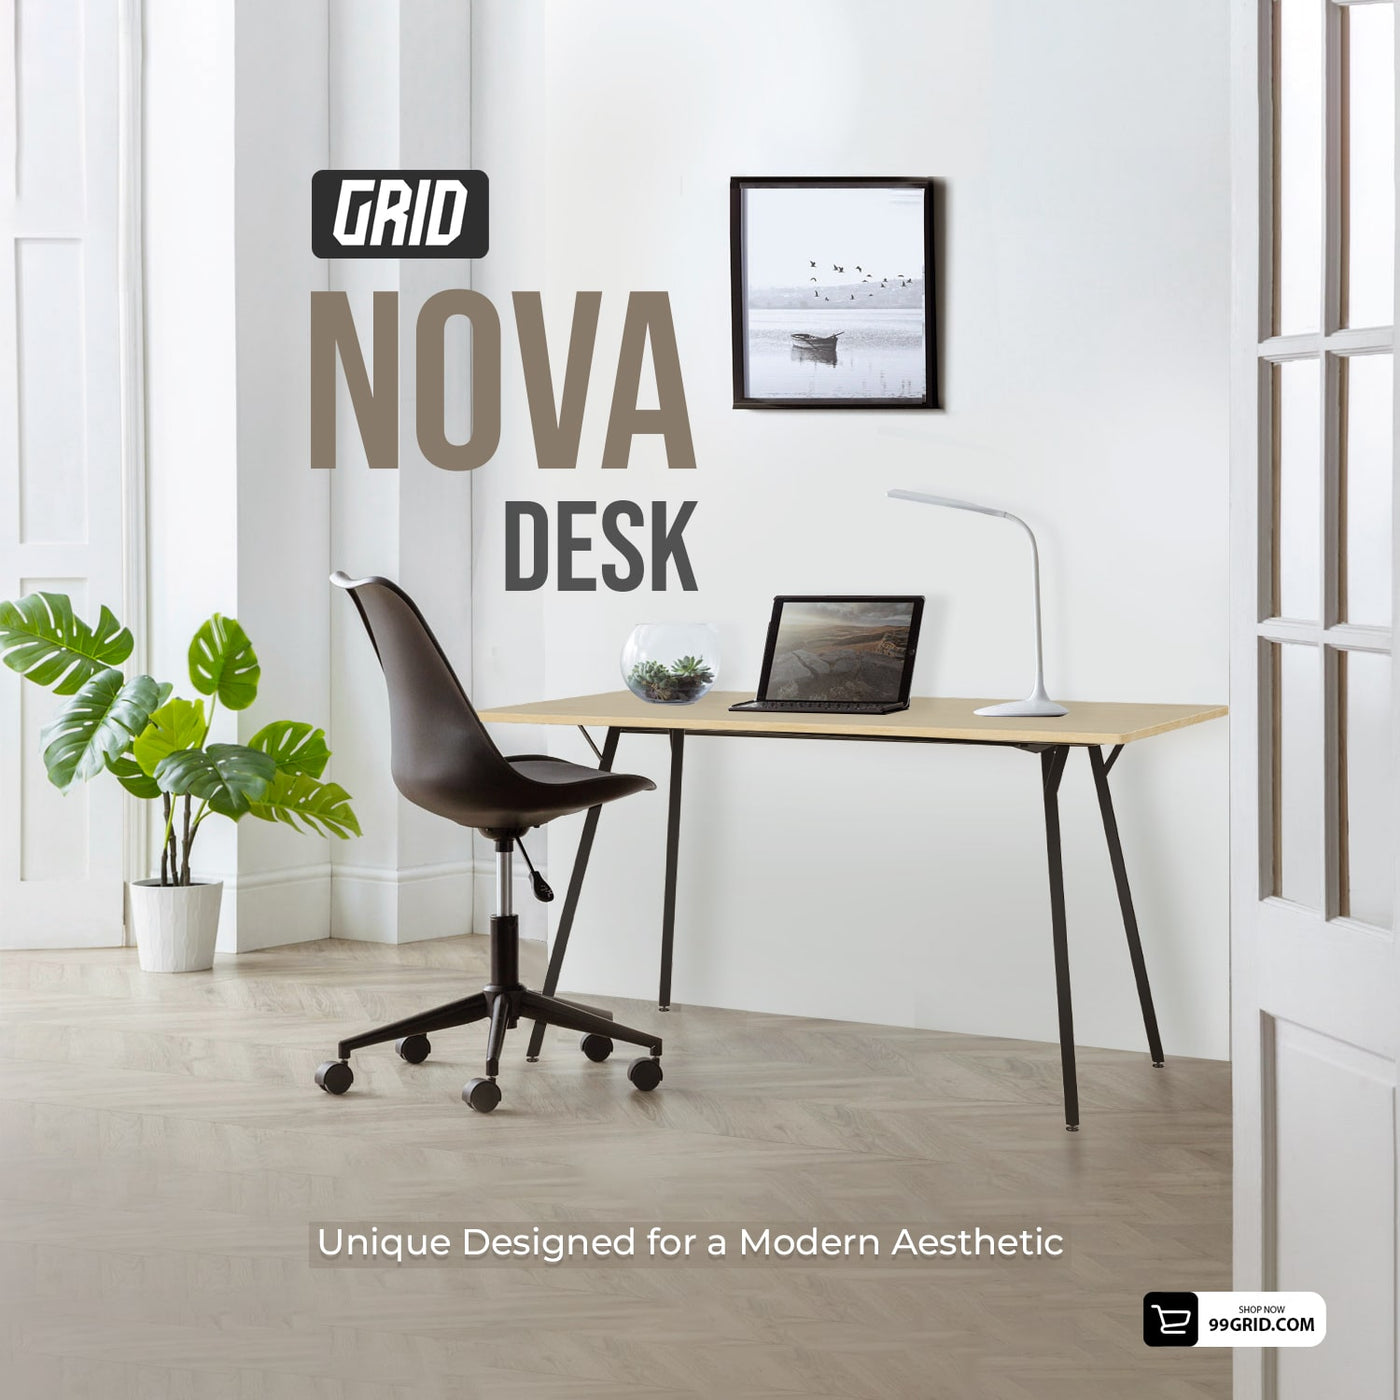 GRID Nova Desk